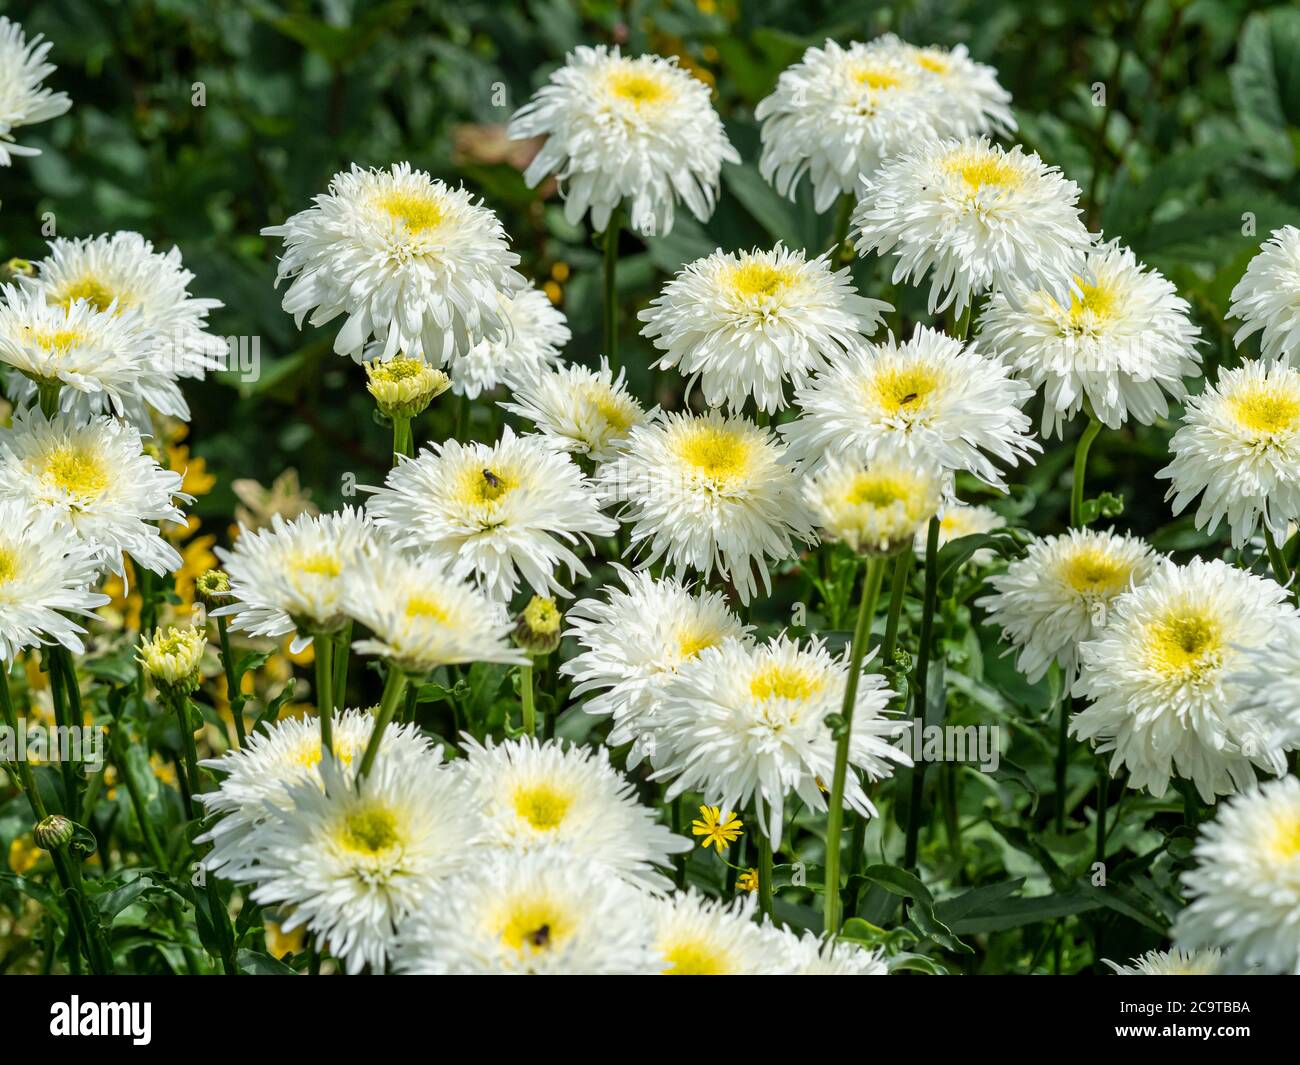 Pretty white and yellow Shasta daisies, Leucanthemum x superbum, flowering in a garden Stock Photo